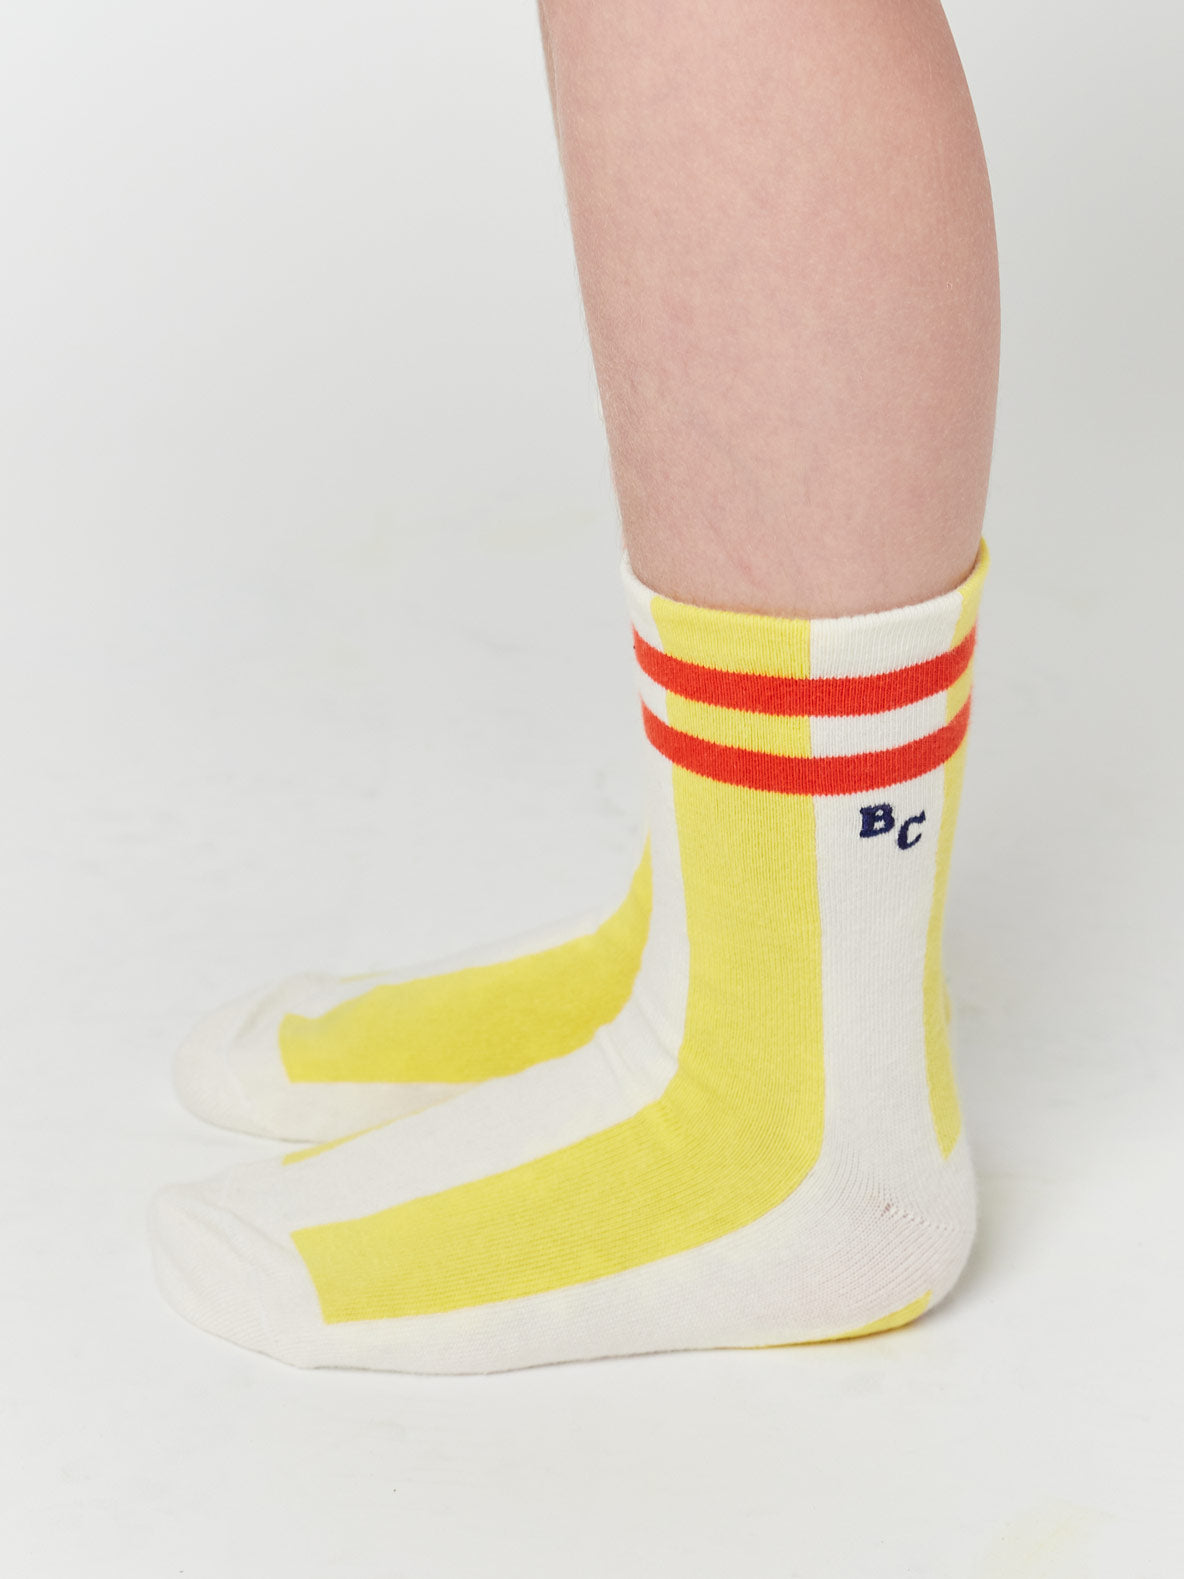 Yellow stripes long socks